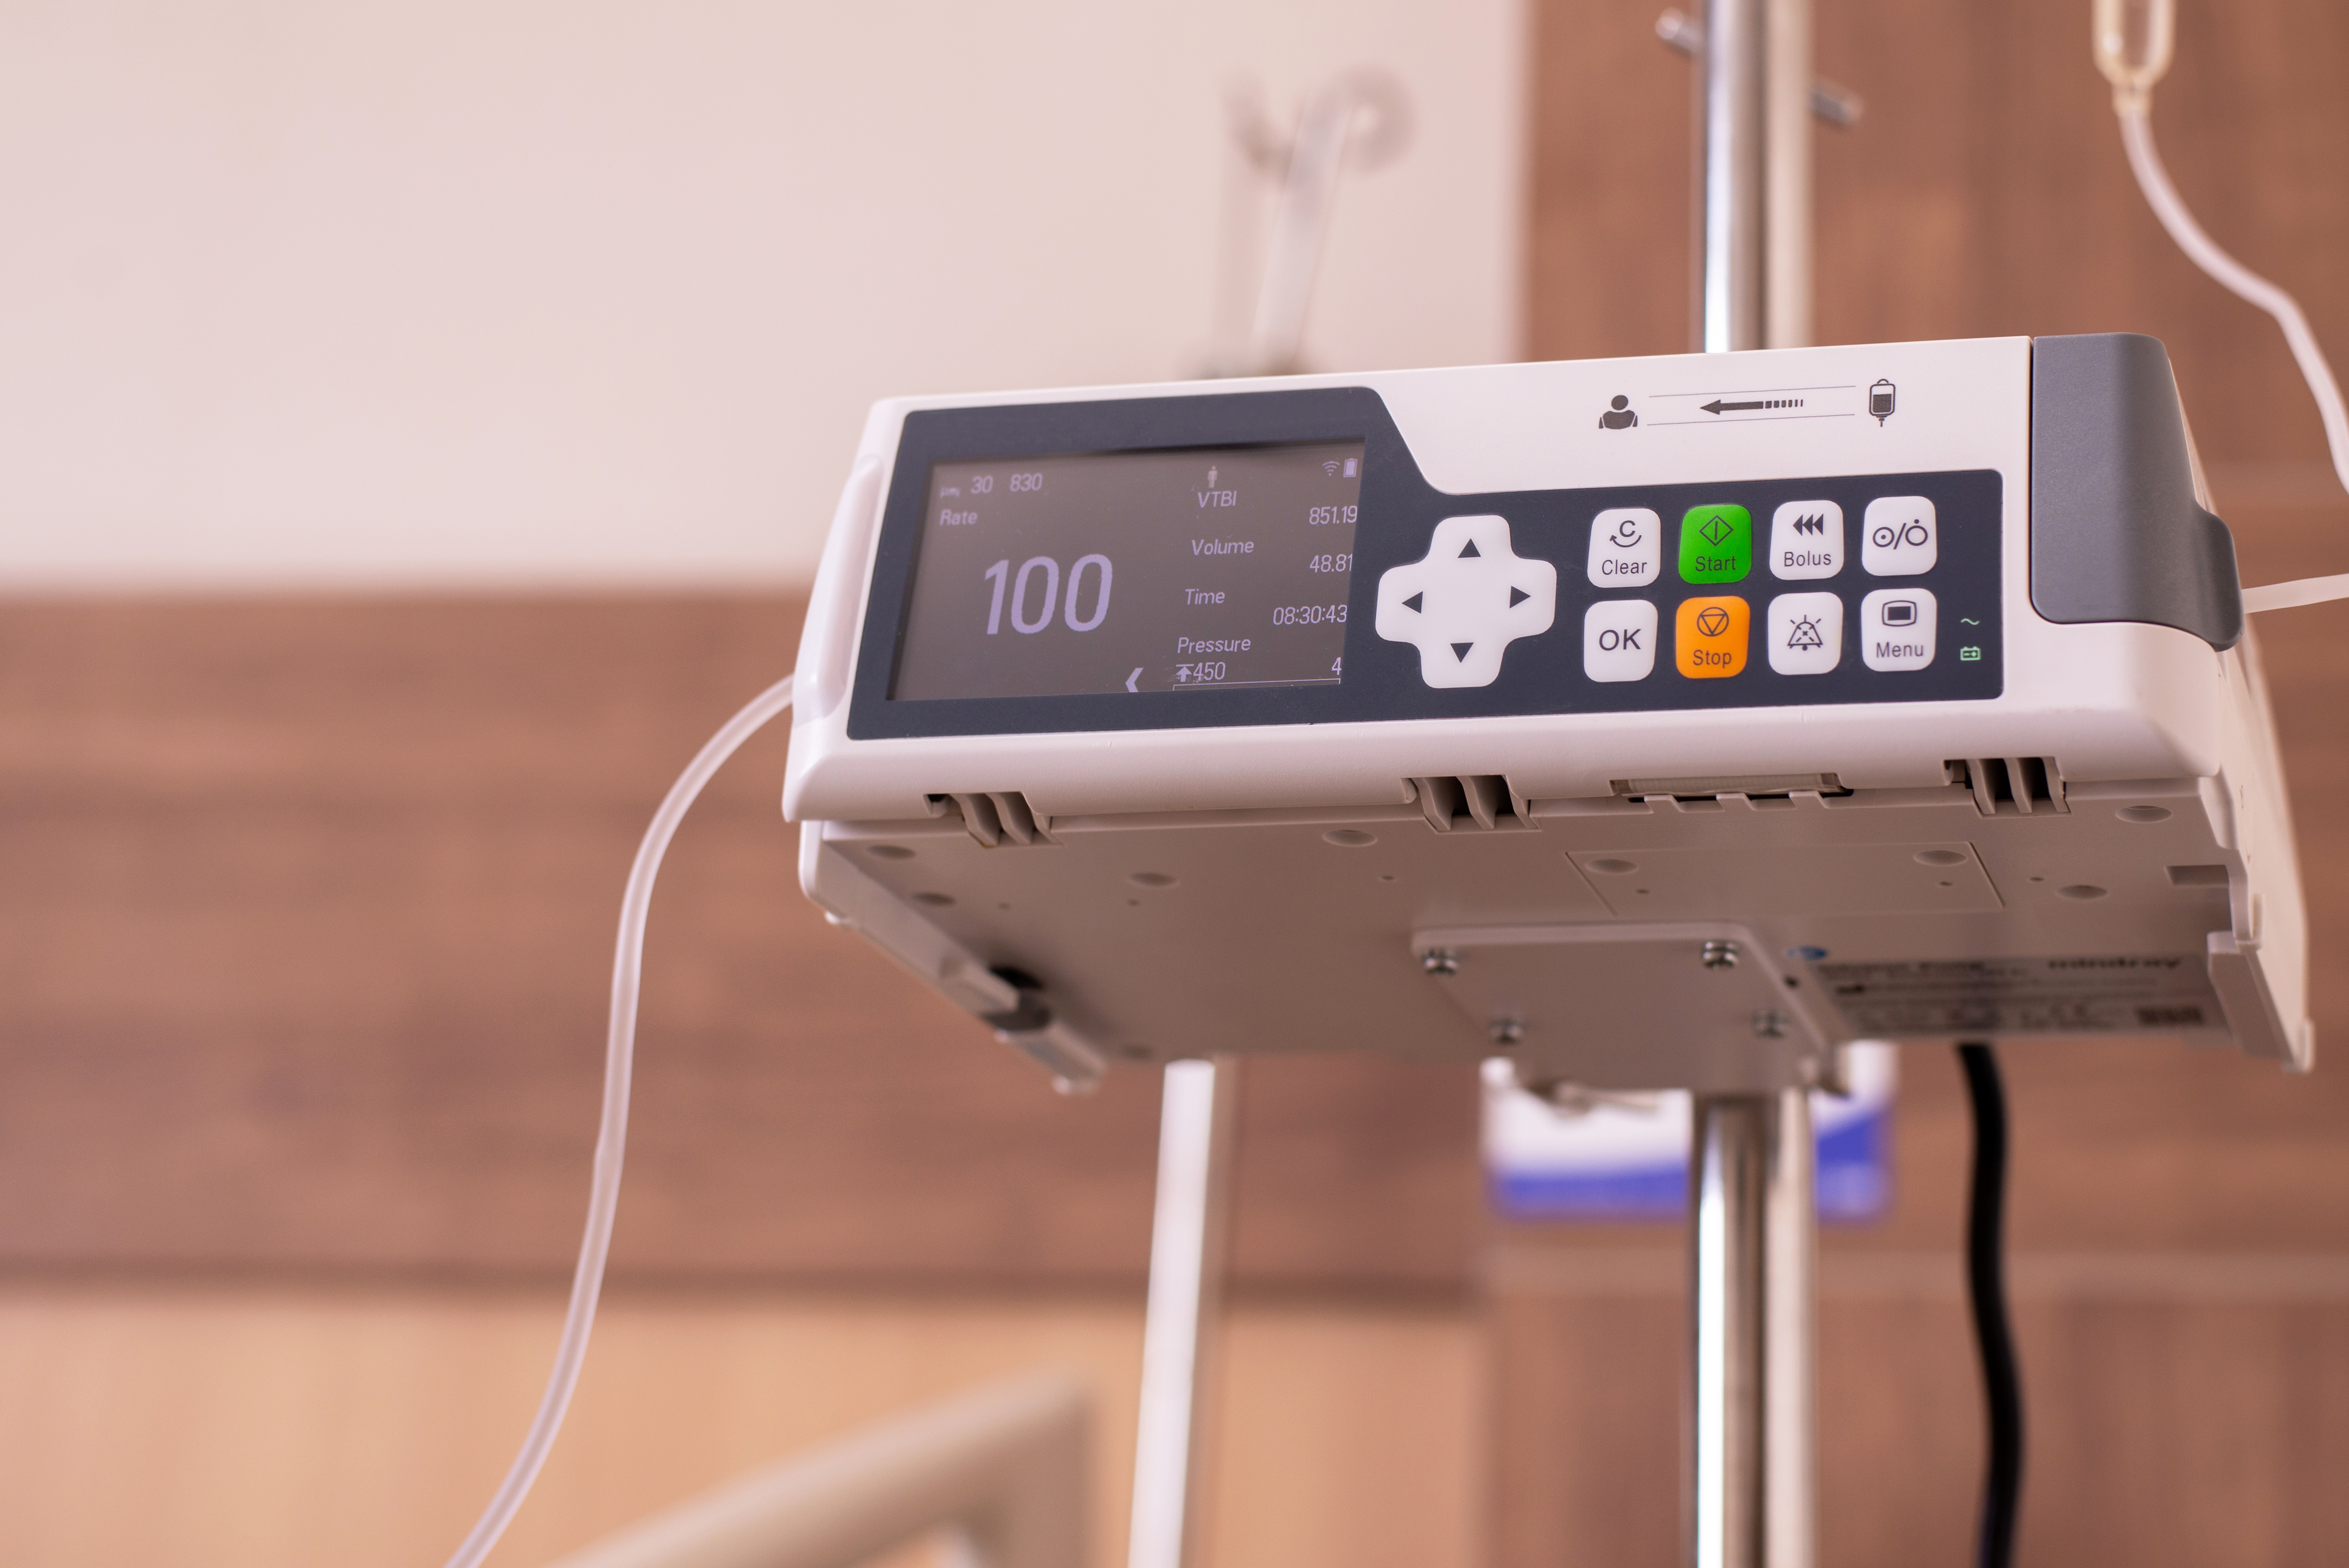 infusion-pump-and-blurred-background-in-hospital-i-2022-11-01-04-50-18-utc.jpg